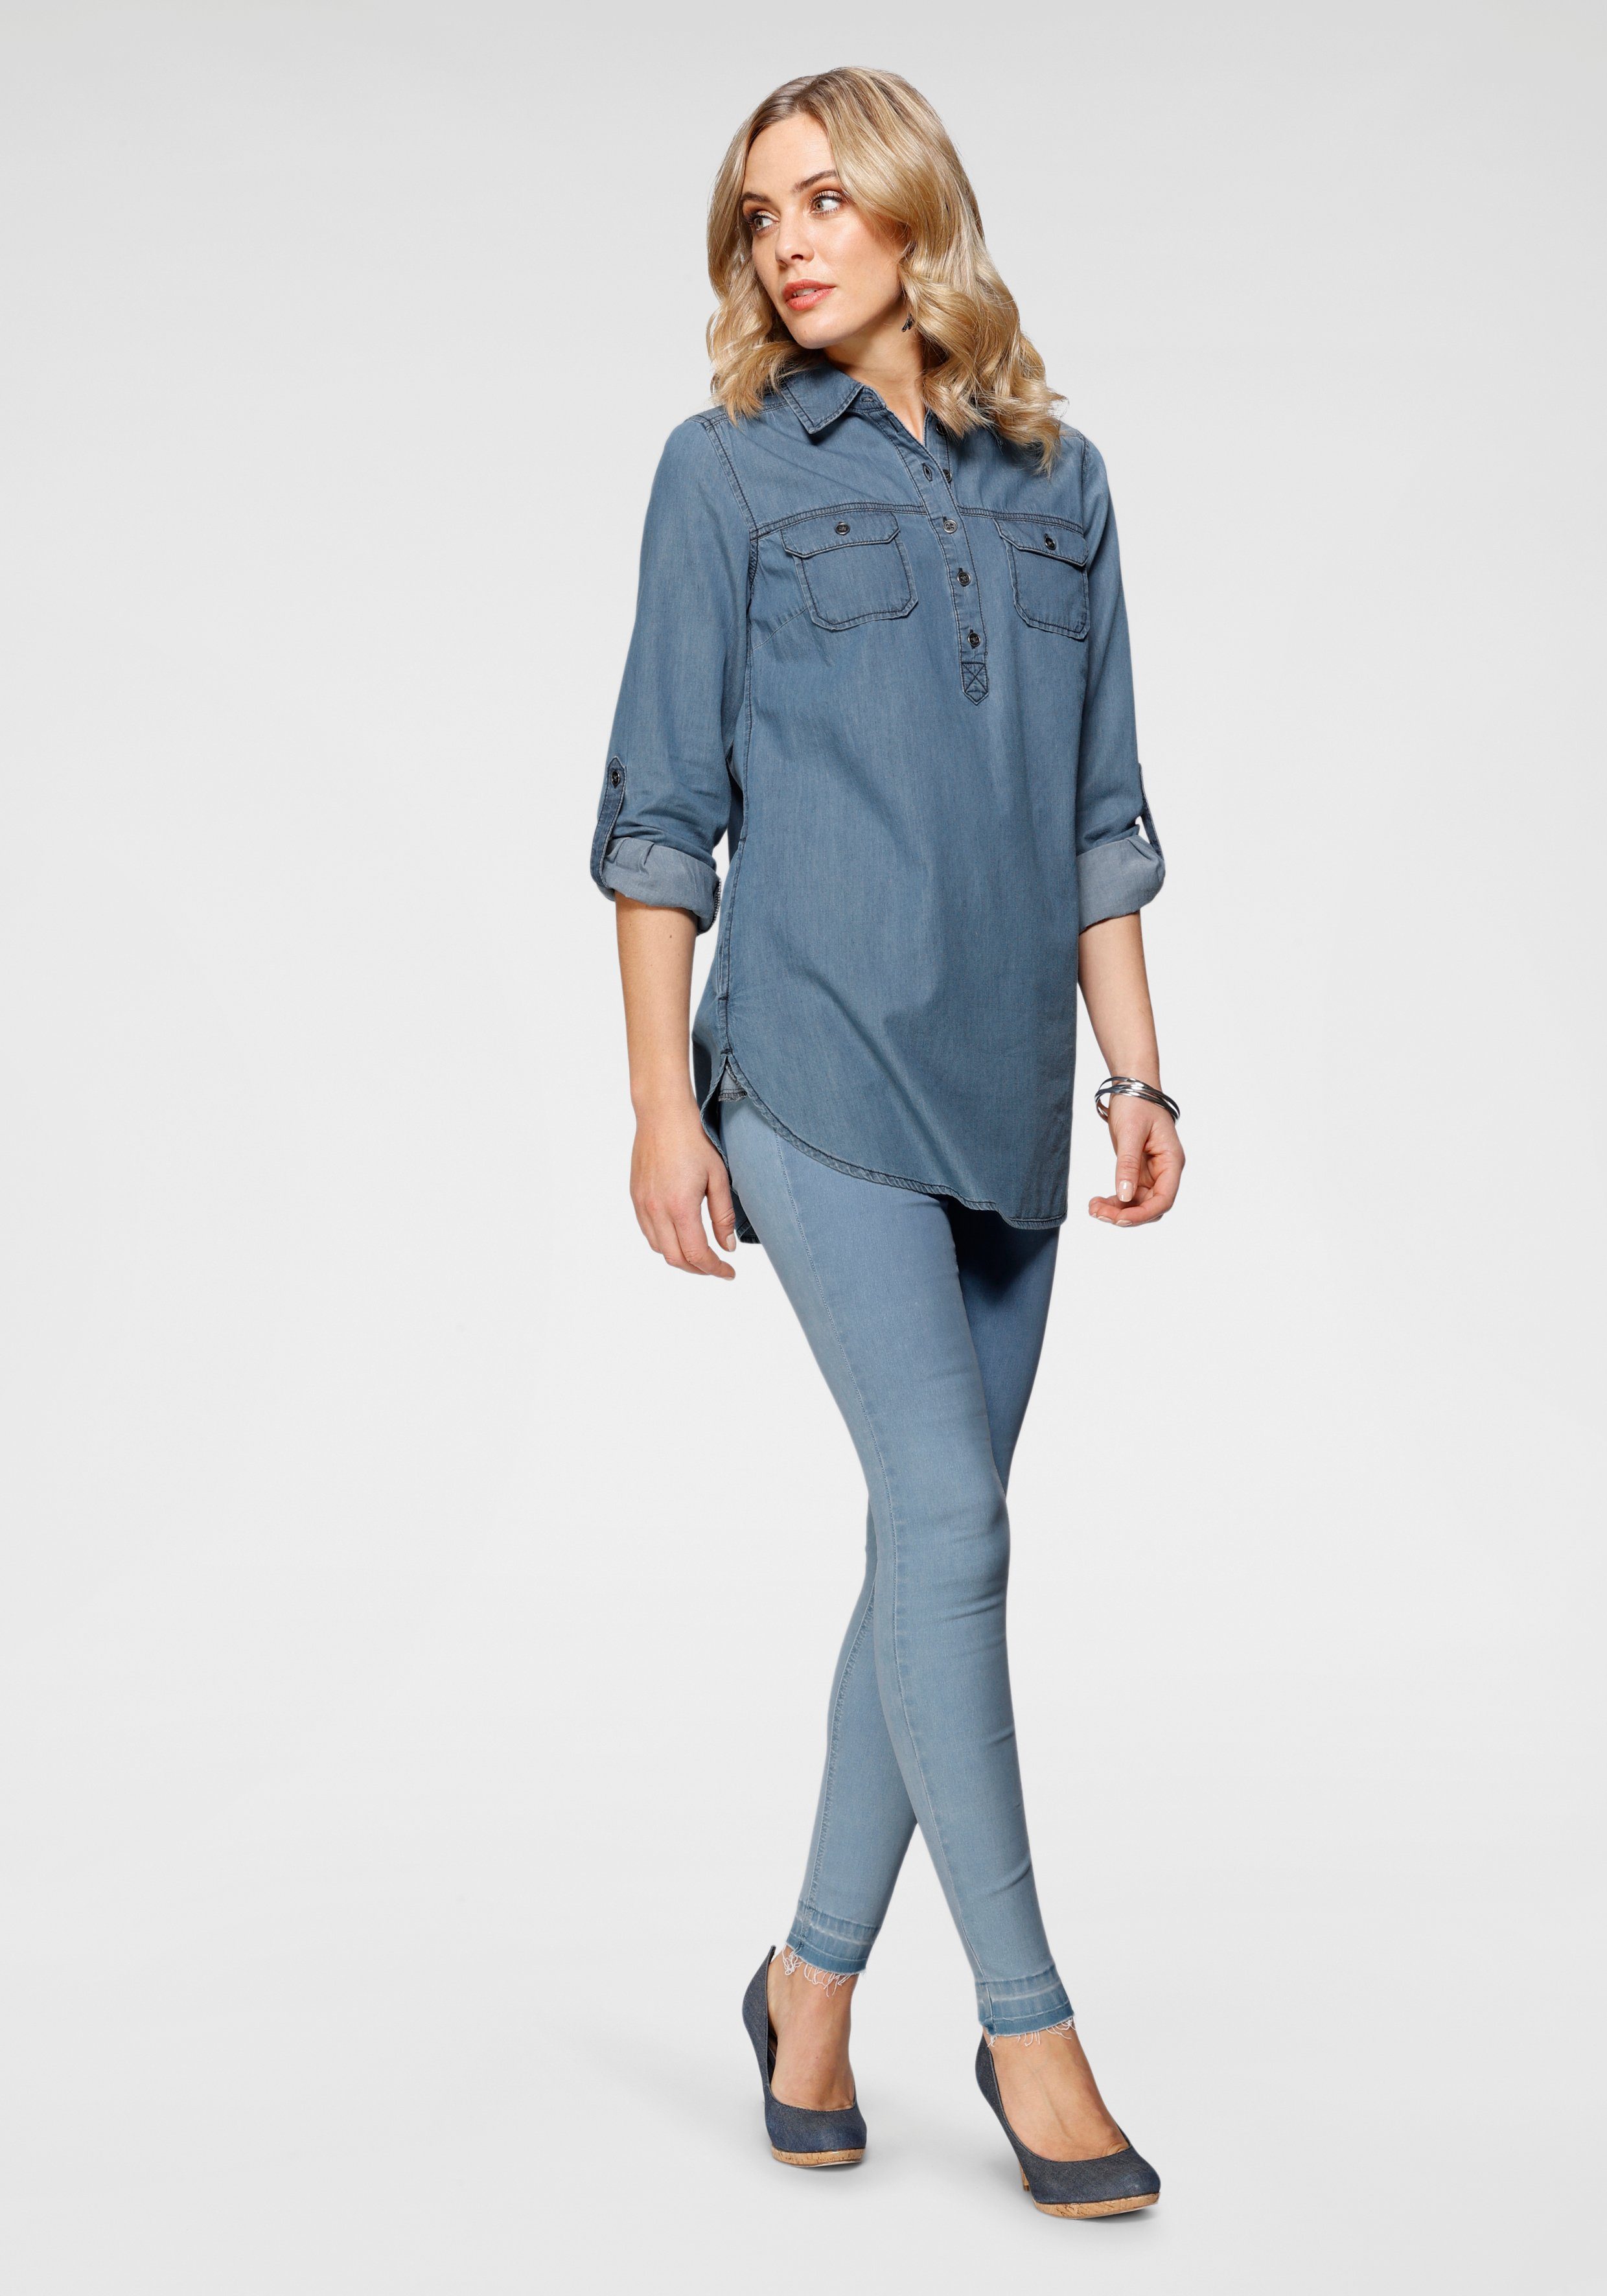 Ultra Arizona offenem light-blue Stretch Waist High Saum Skinny-fit-Jeans mit